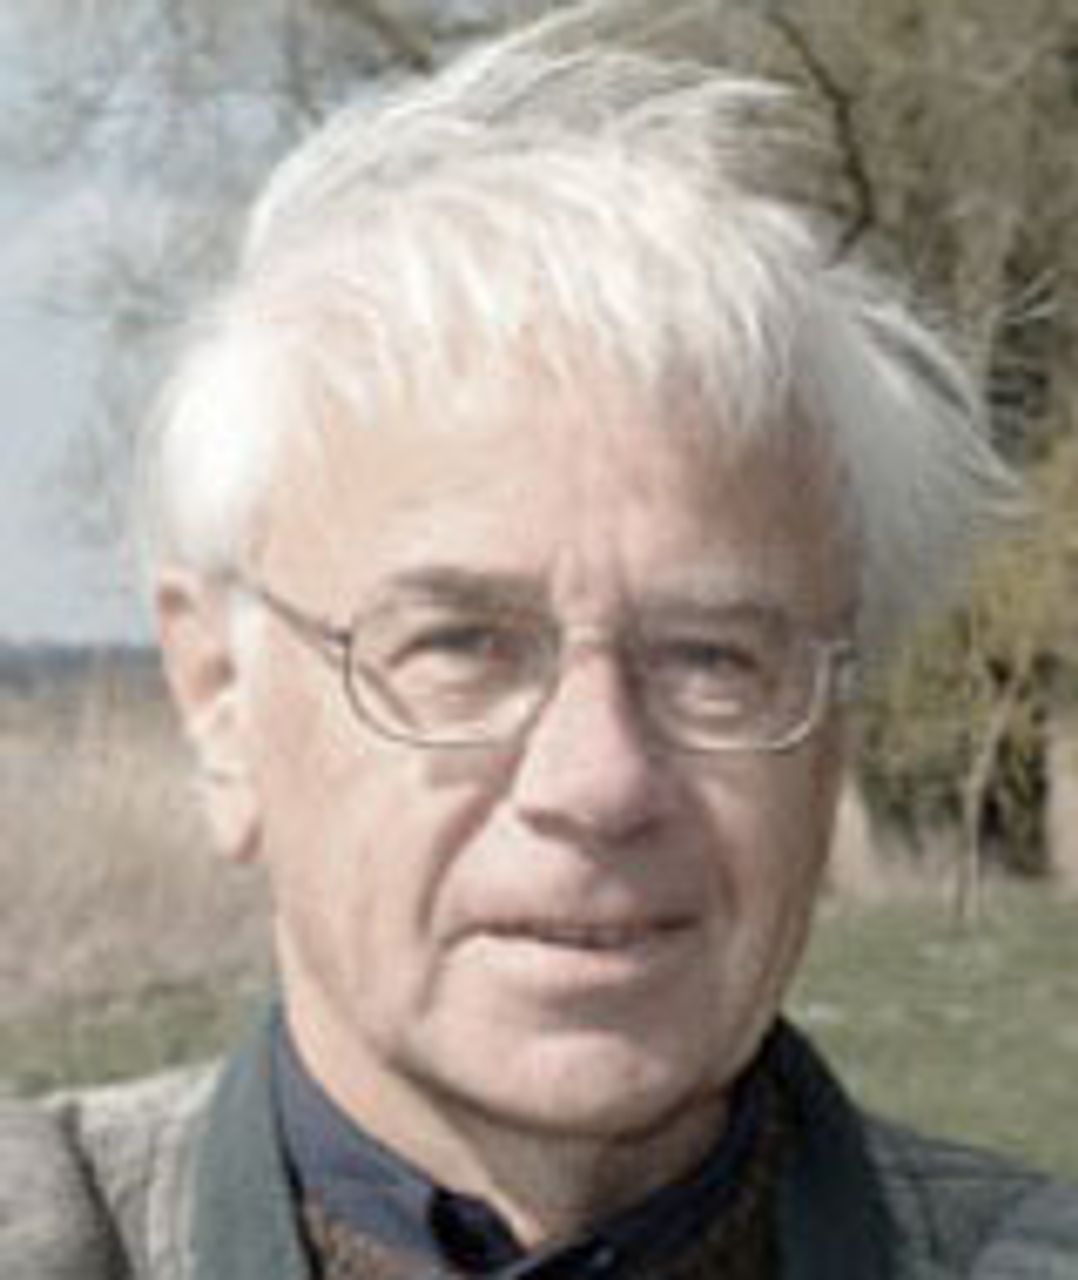 Rainer Simon